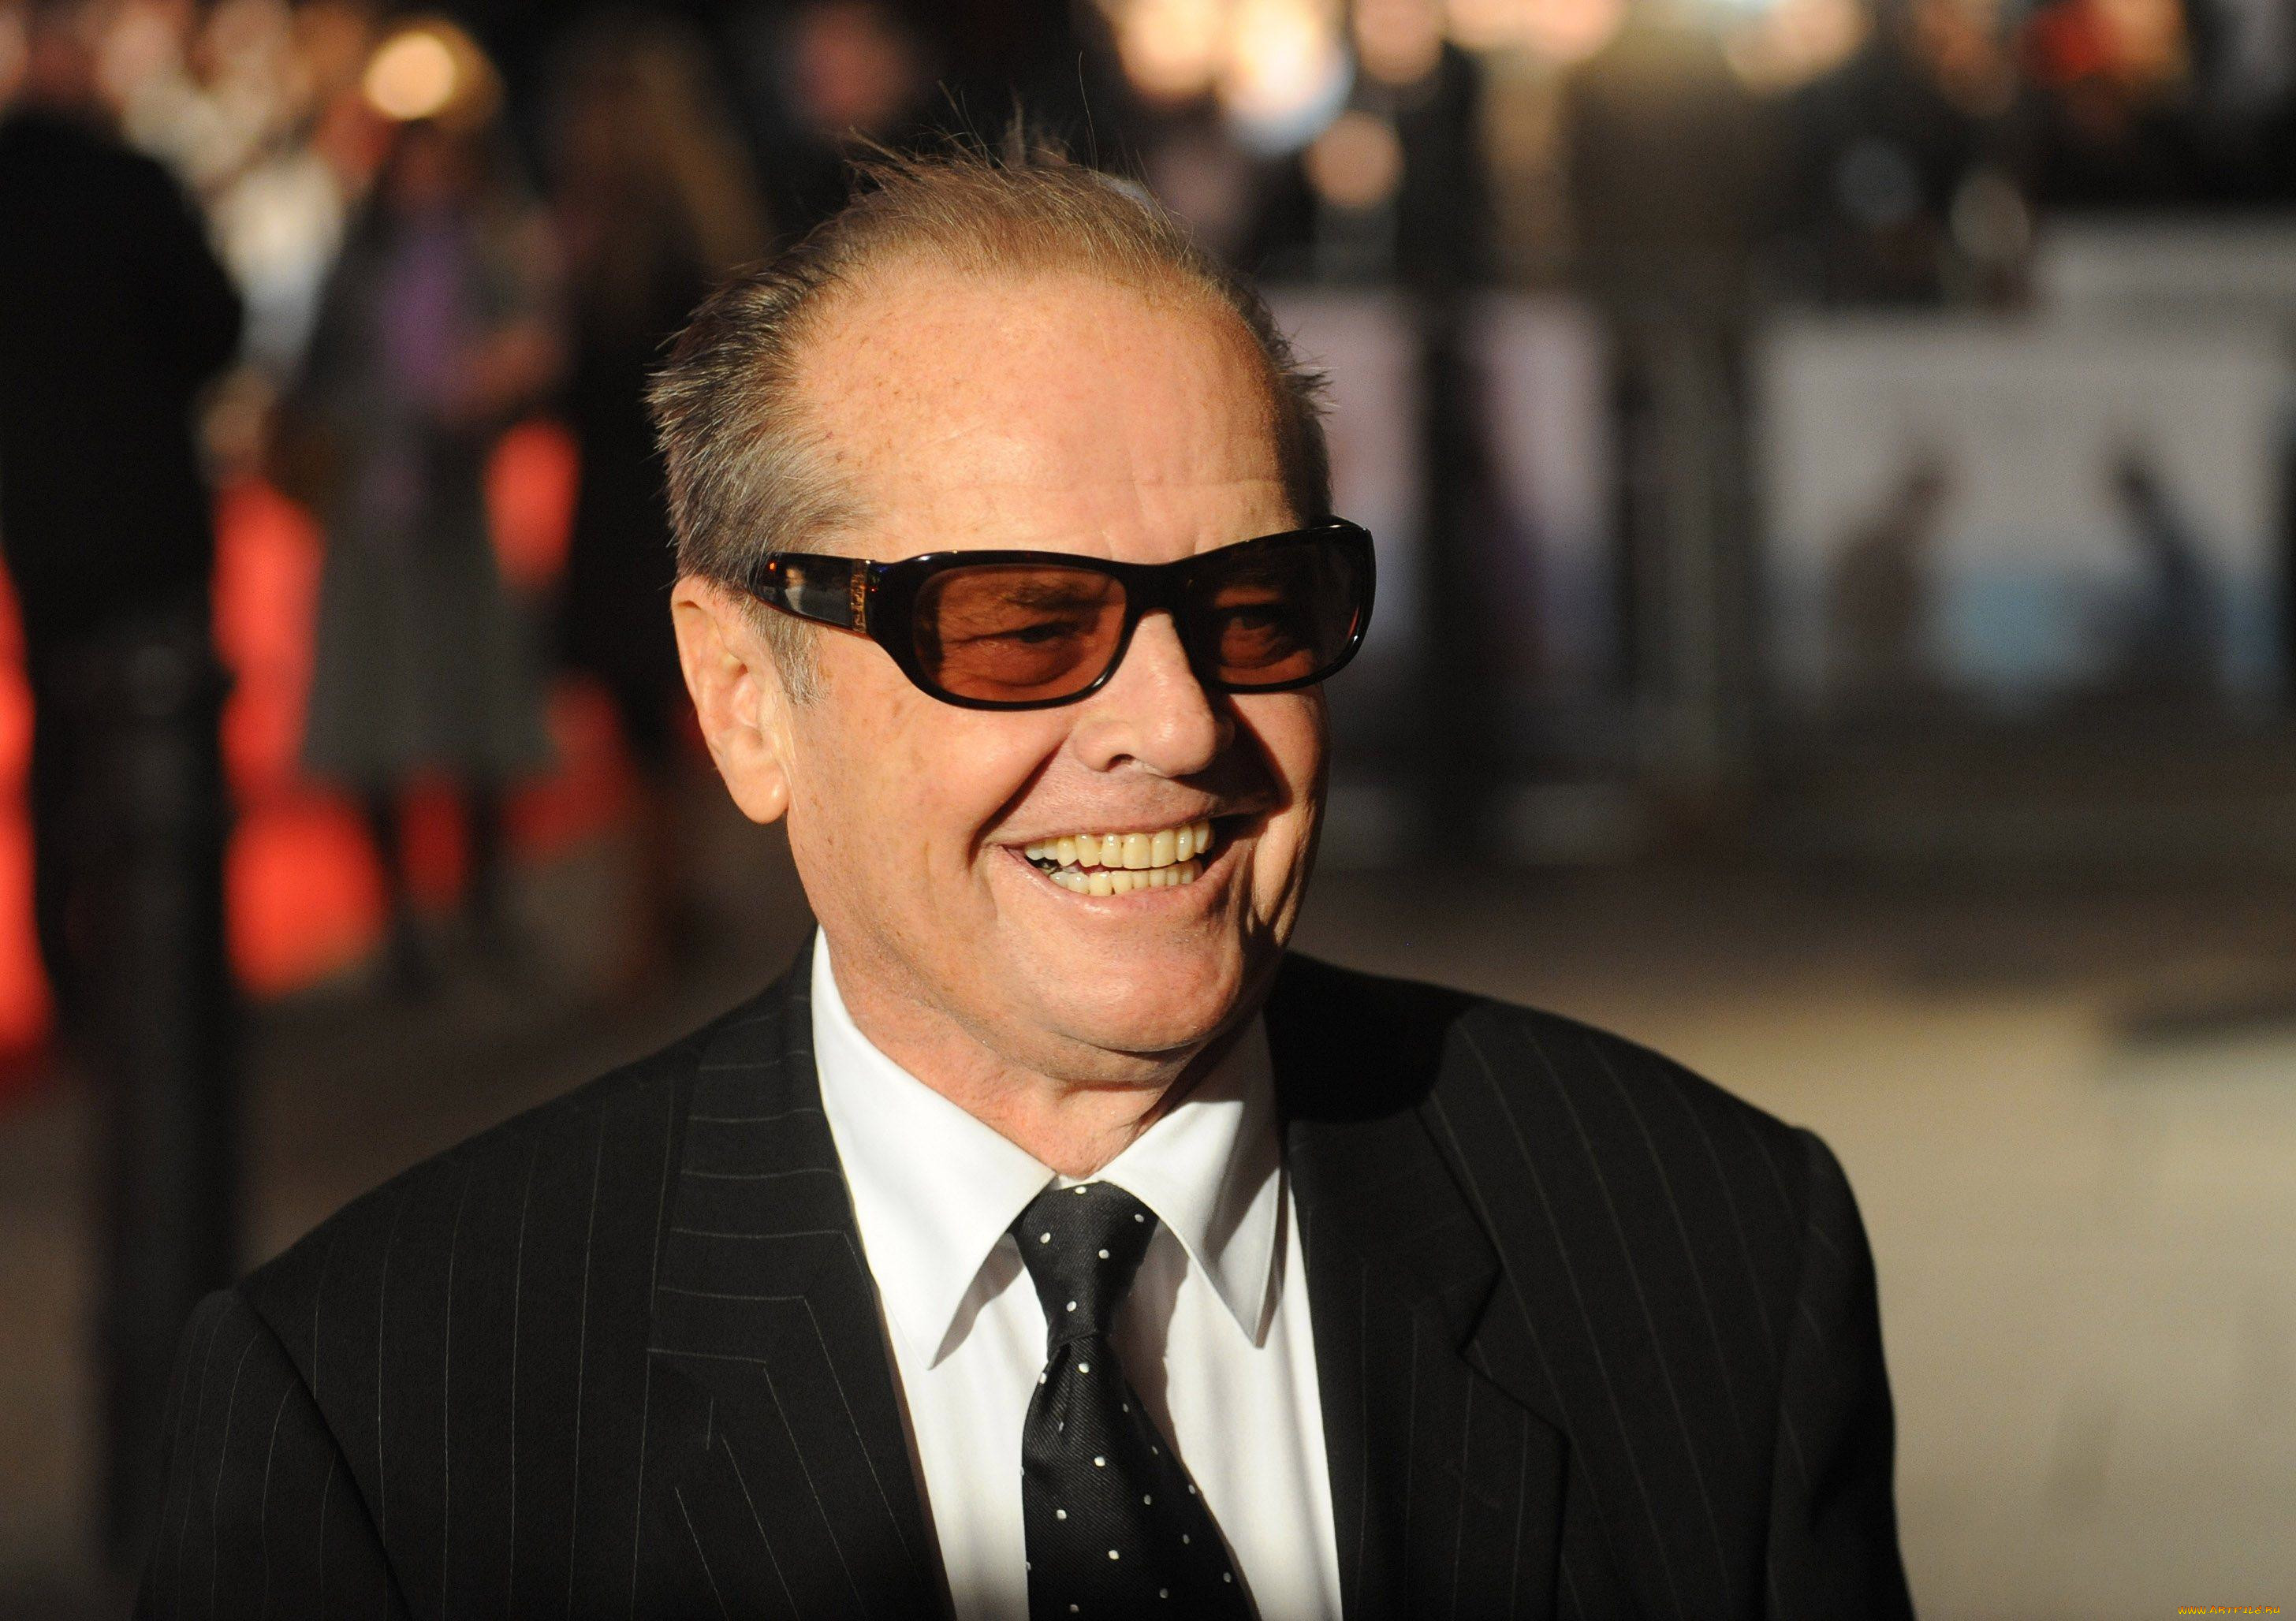 Jack Nicholson Sunglasses